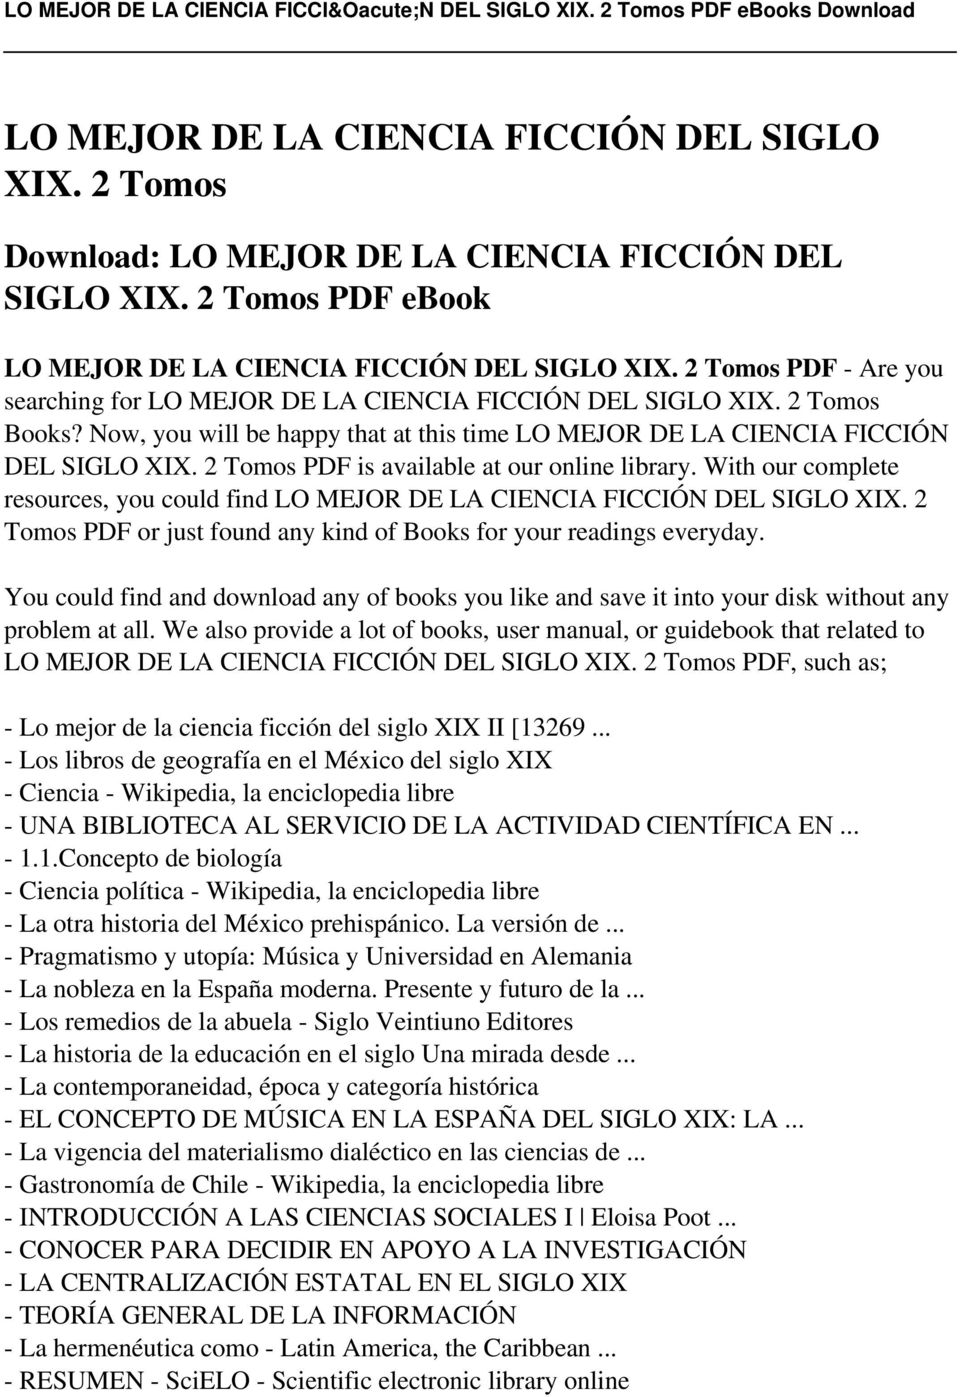 2 Tomos PDF is available at our online library. With our complete resources, you could find LO MEJOR DE LA CIENCIA FICCIÓN DEL SIGLO XIX.